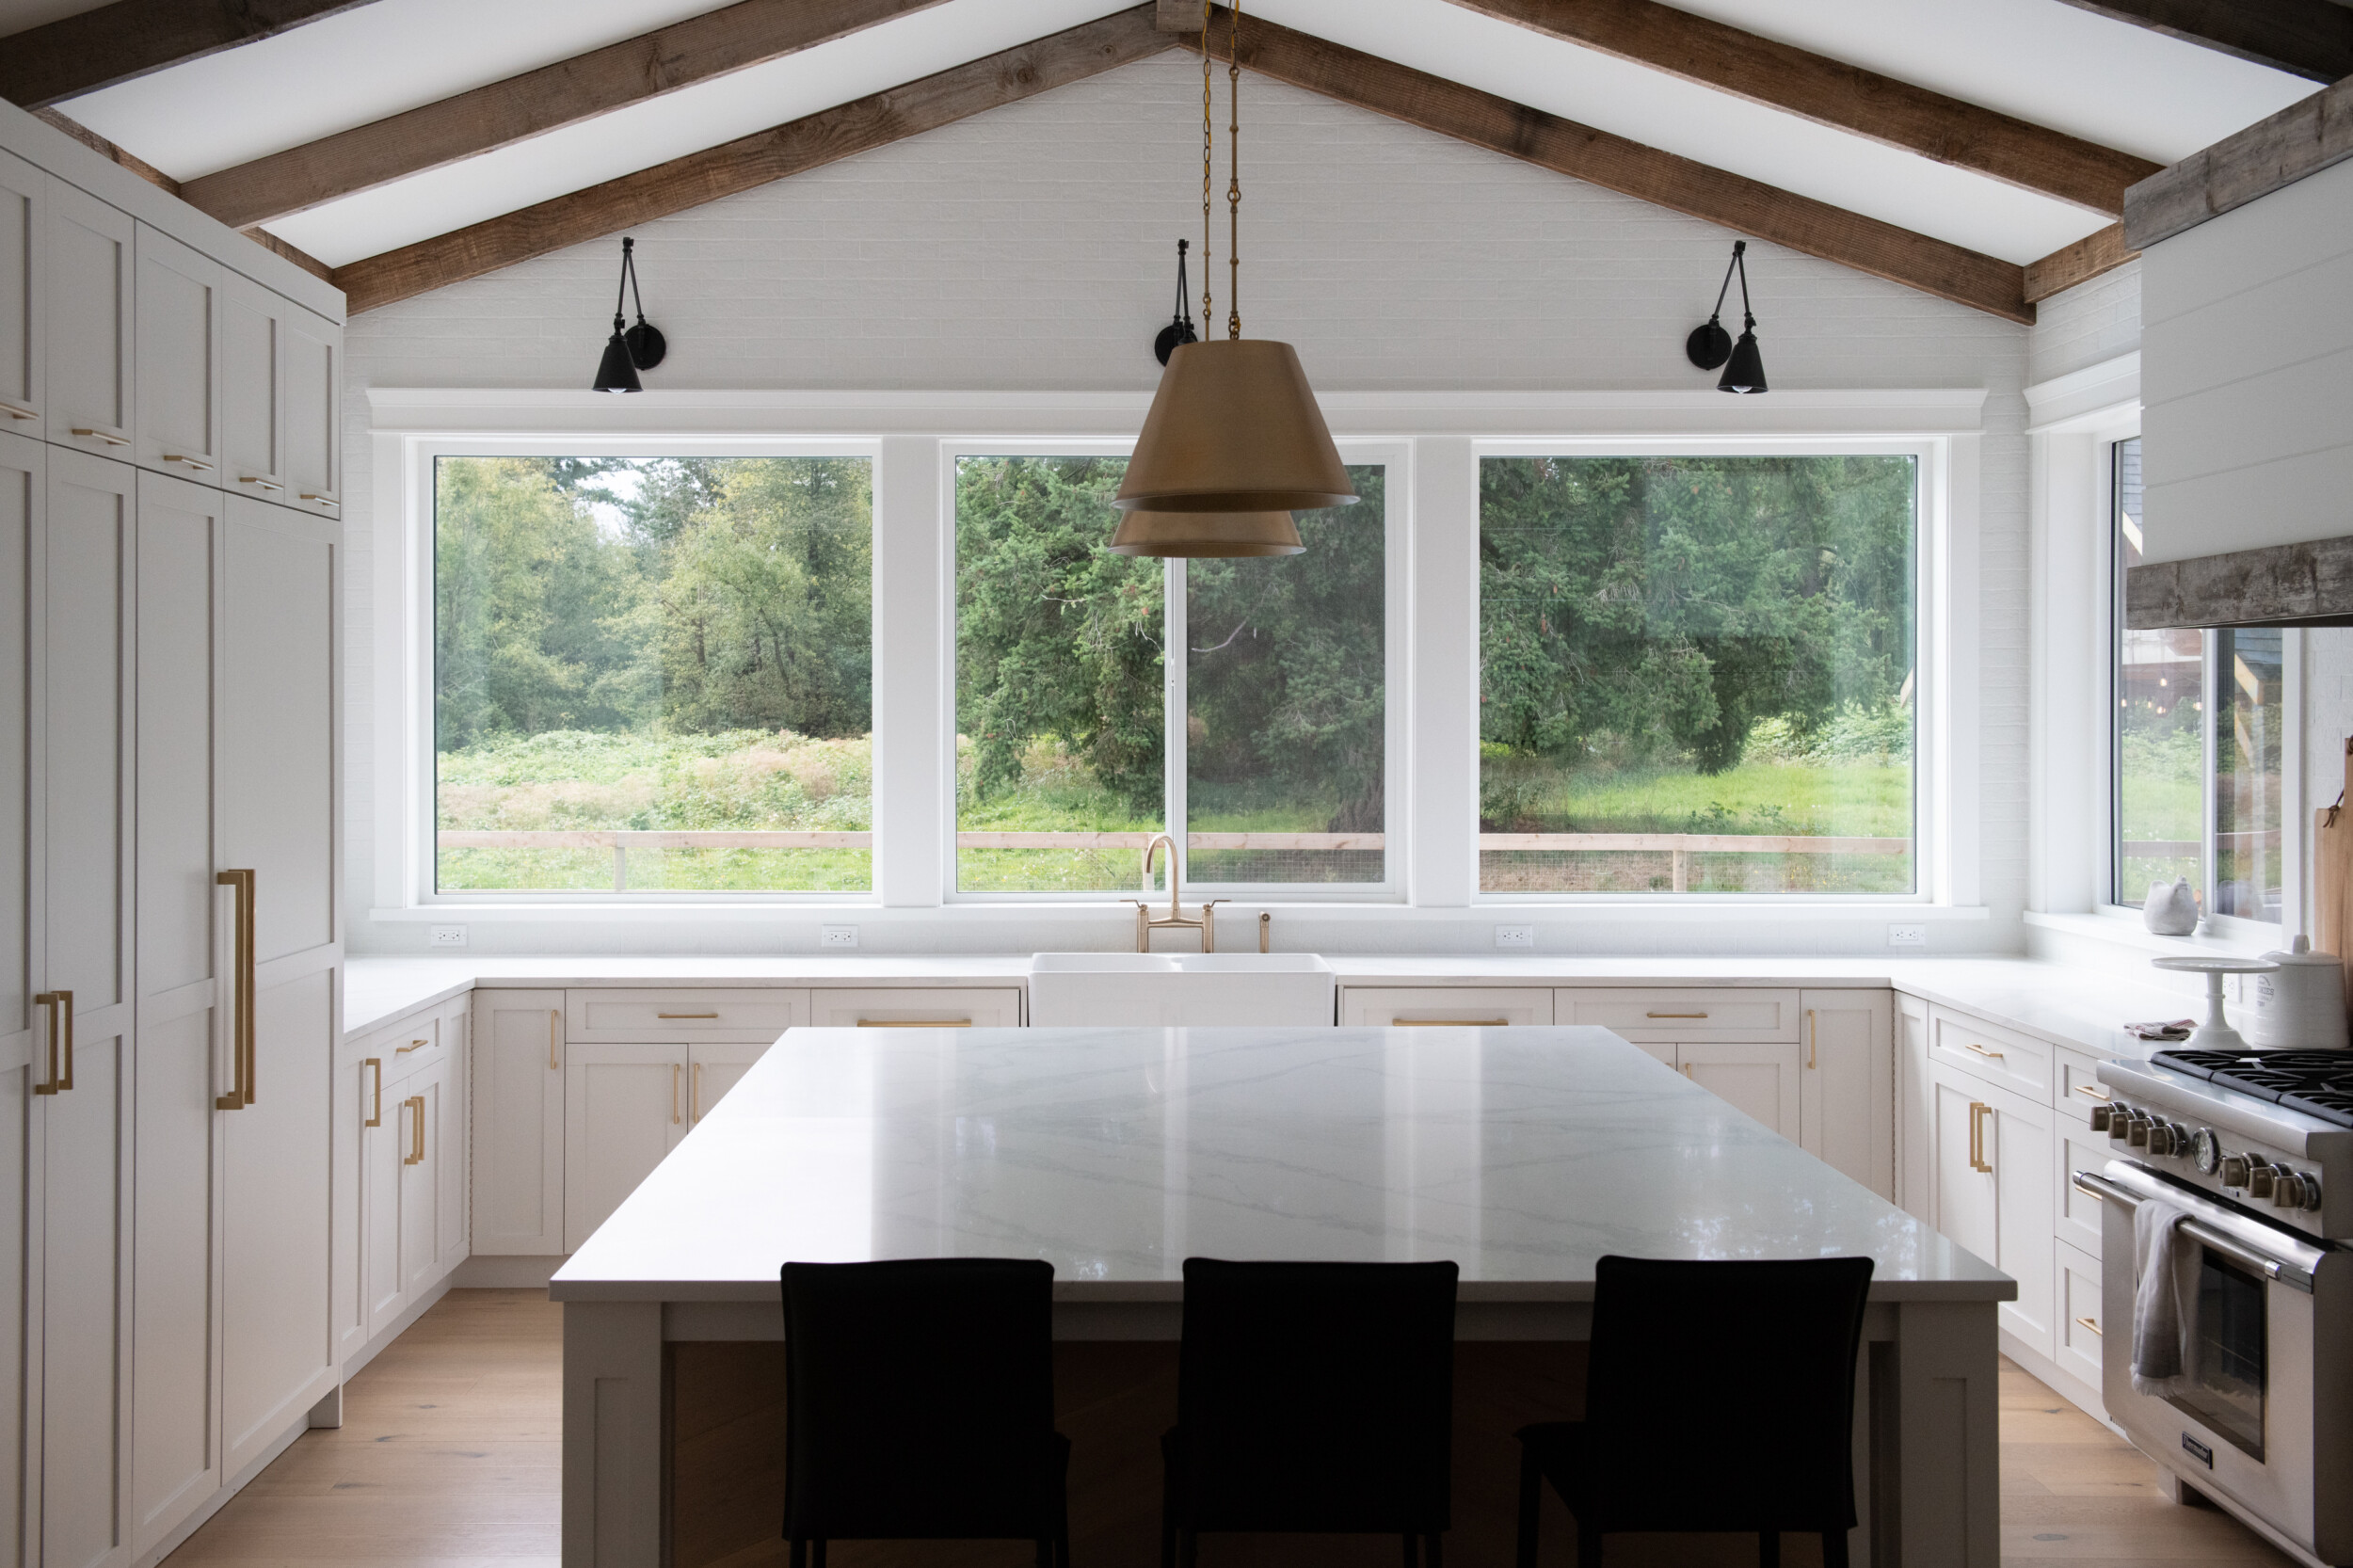 Ceiling Light Shade Decor Lighting Fixture for Farmhouse Kitchen Cafe | eBay